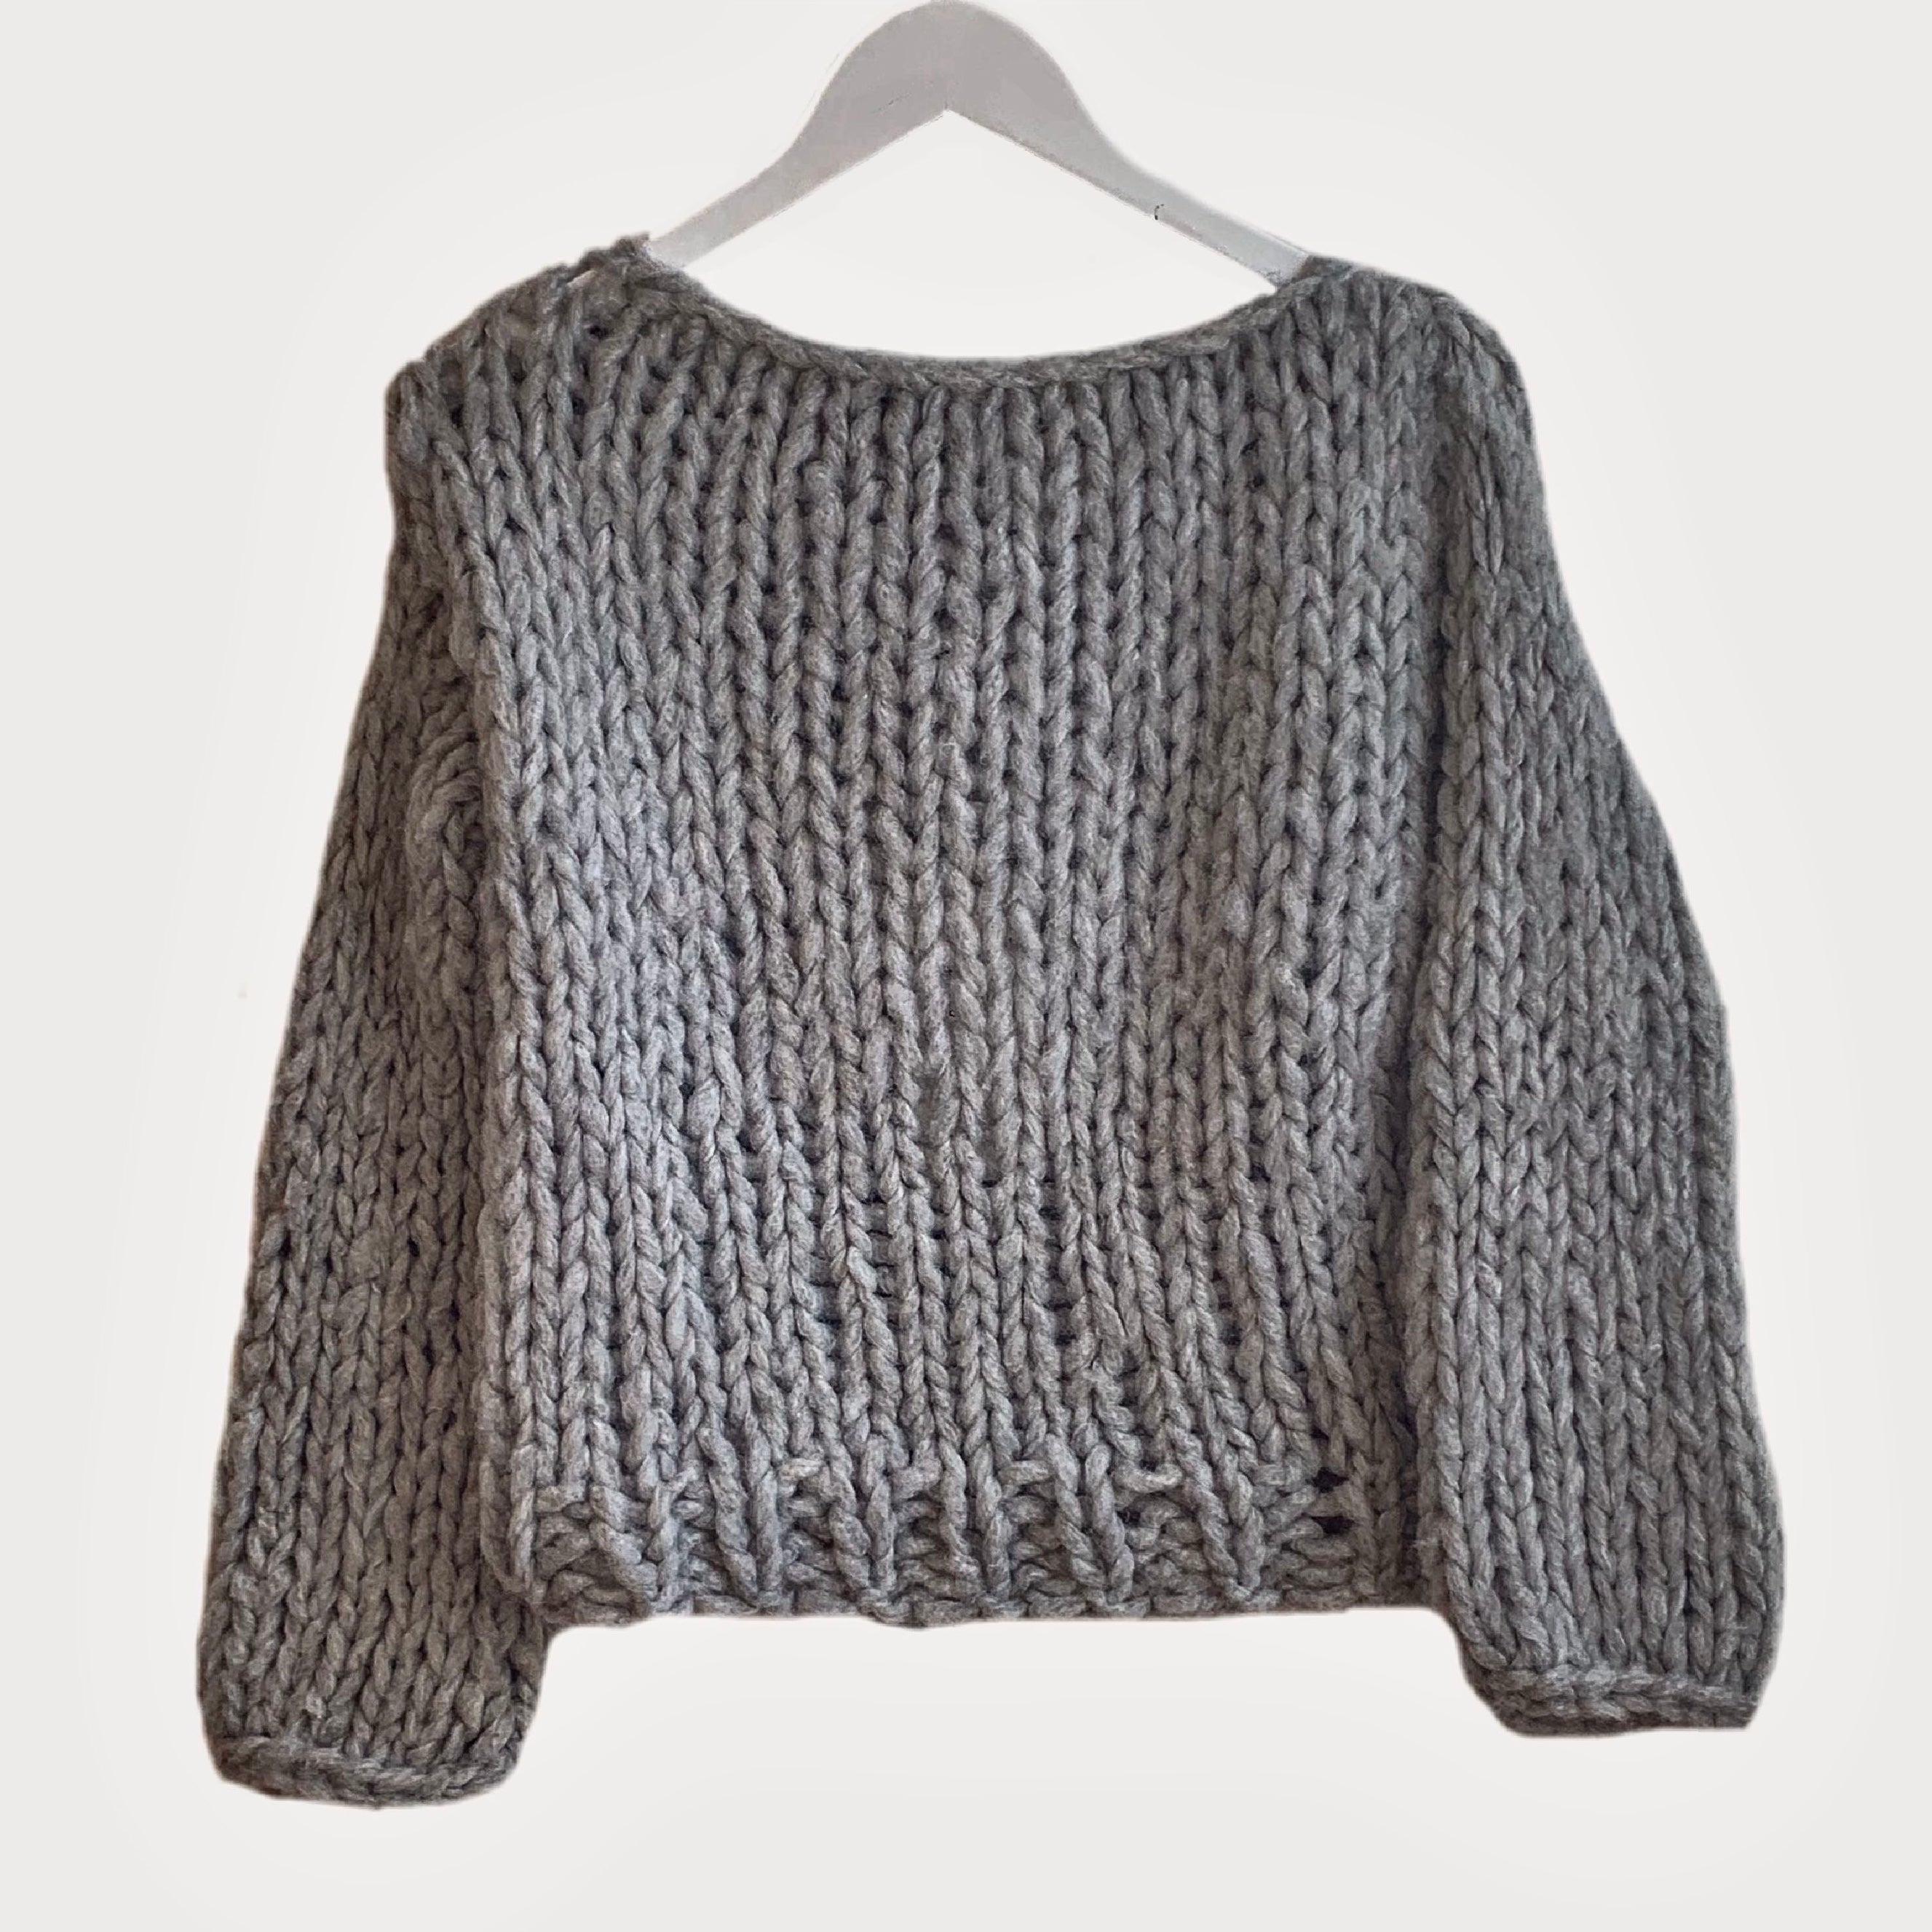   Cashmere Sweater  